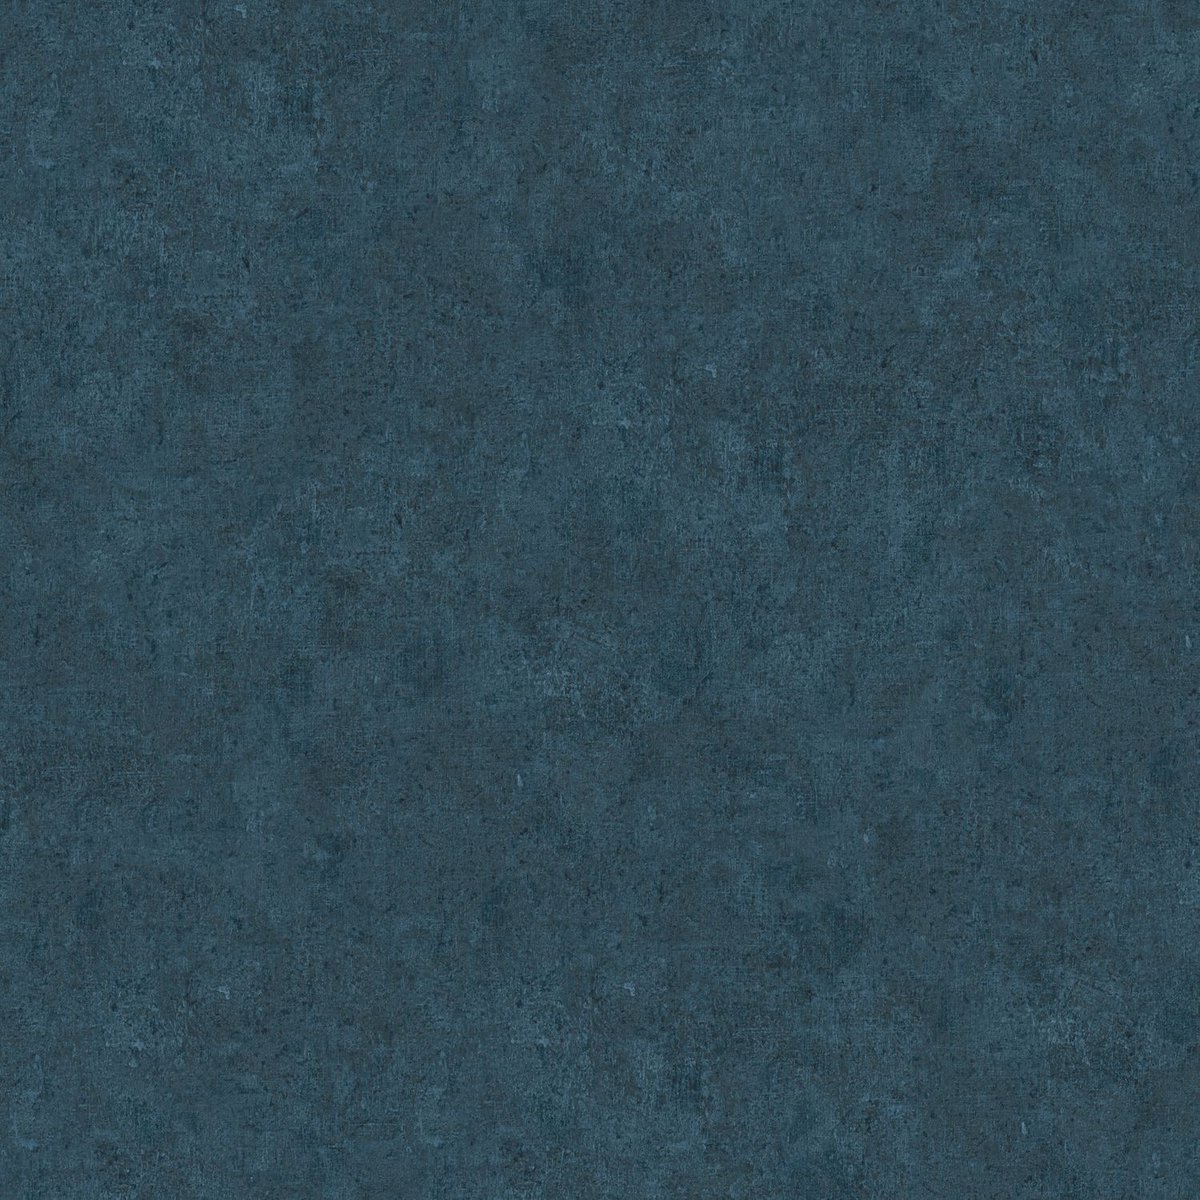 Ton sur ton behang Profhome 376562-GU vliesbehang licht gestructureerd tun sur ton mat blauw 5,33 m2